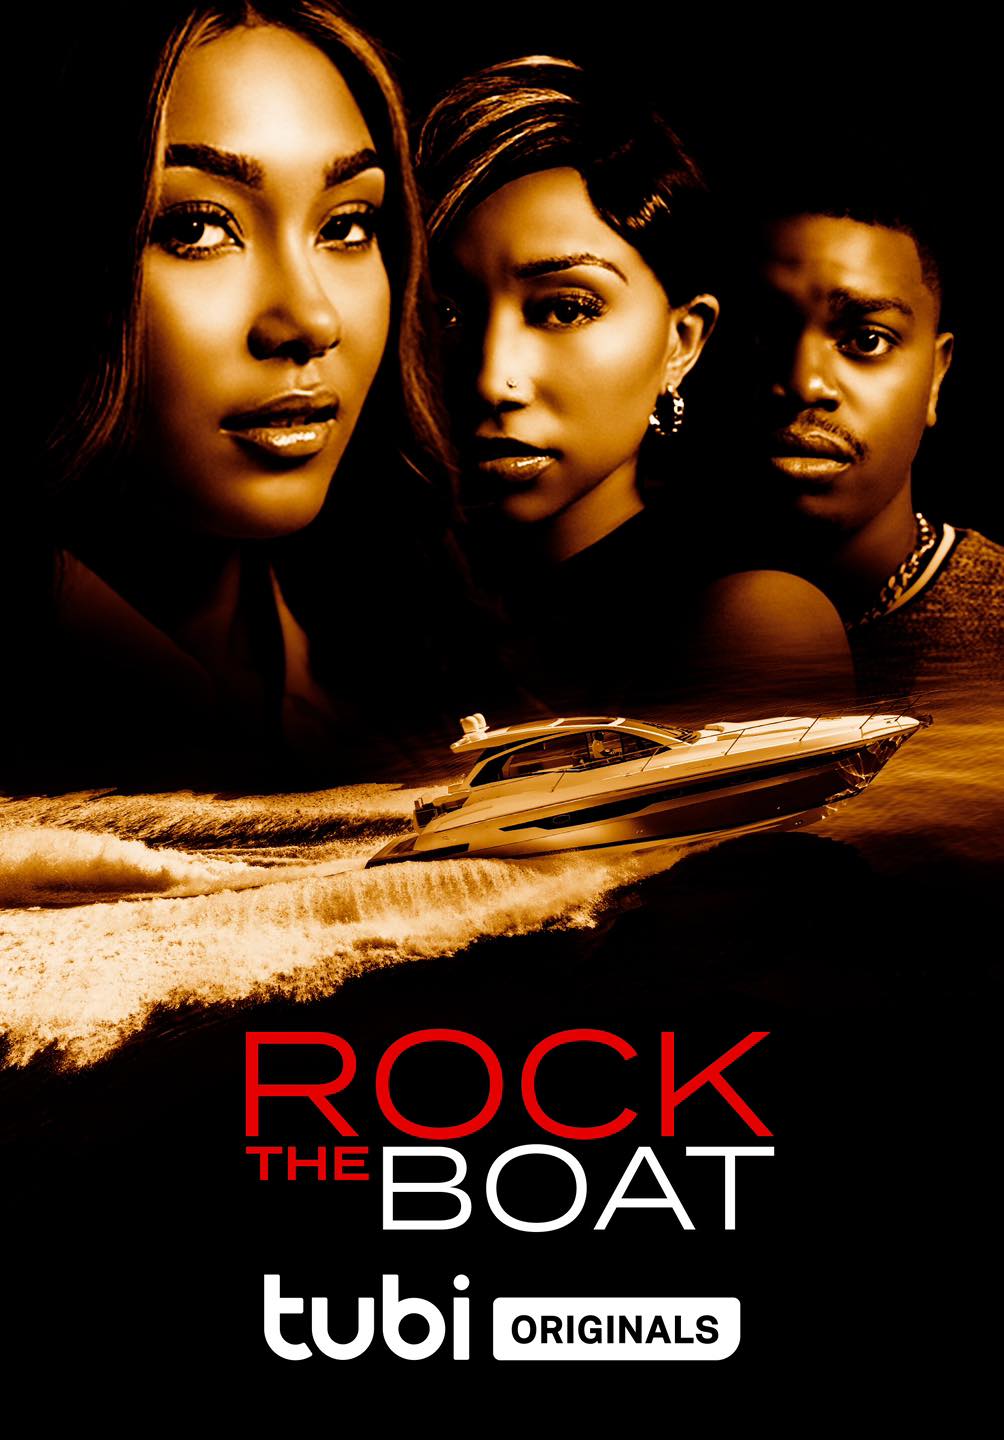 St Trailer For Tubi Original Movie Rock The Boat